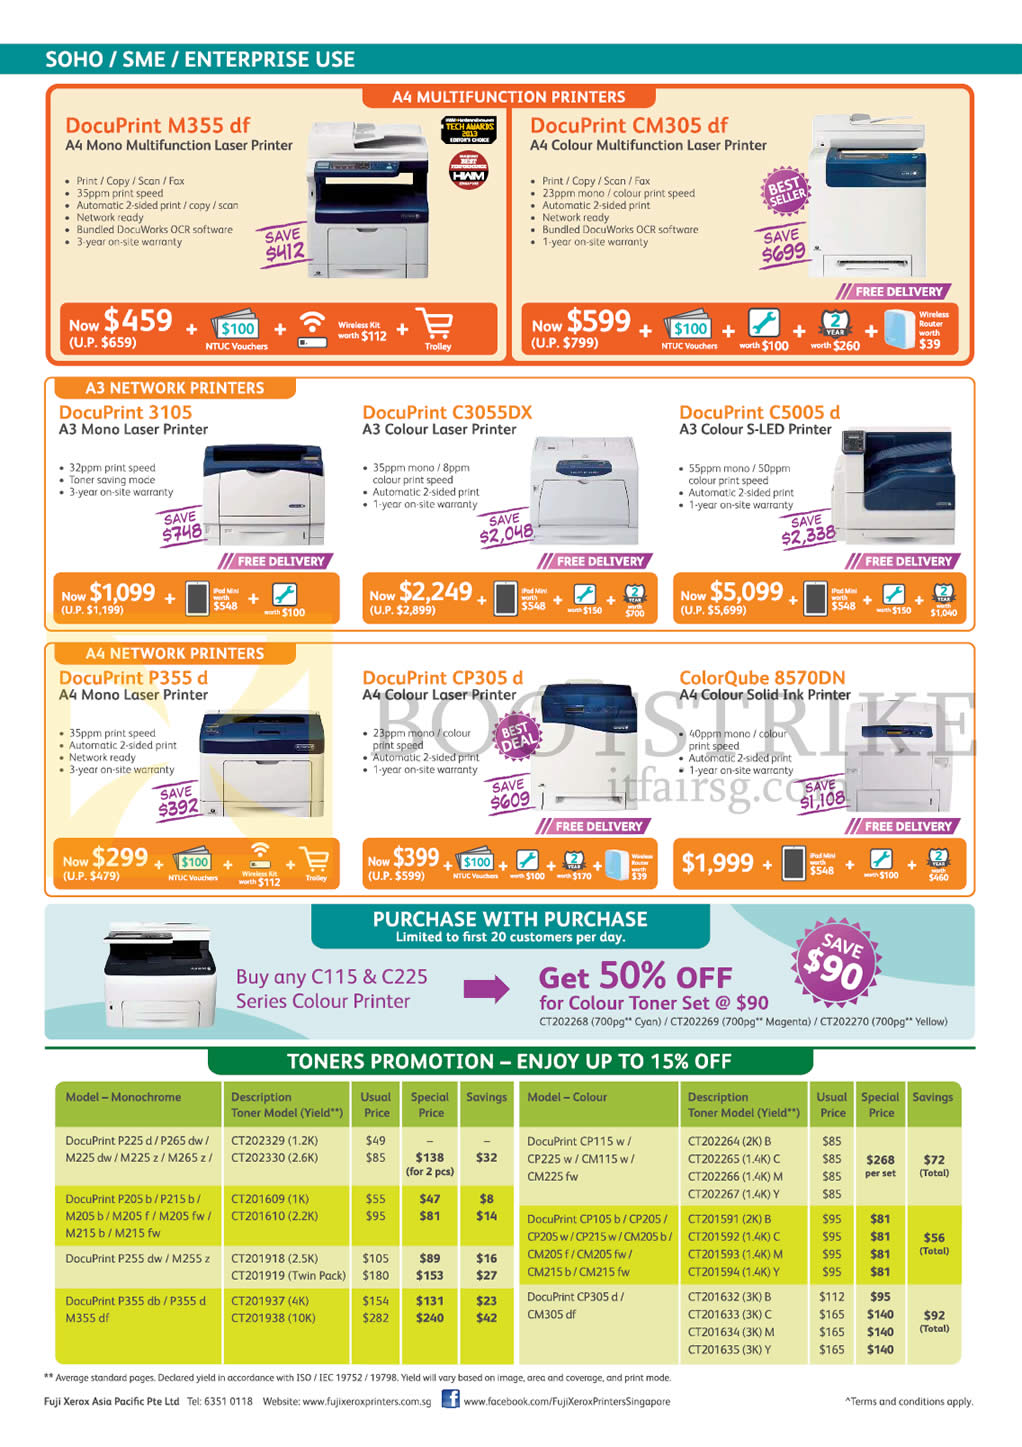 IT SHOW 2015 price list image brochure of Fuji Xerox Printers Laser, Toners, DocuPrint M355 Df, CM305df, 3105, C3055DX, C5005d, P355d, CP305d, 8570DN